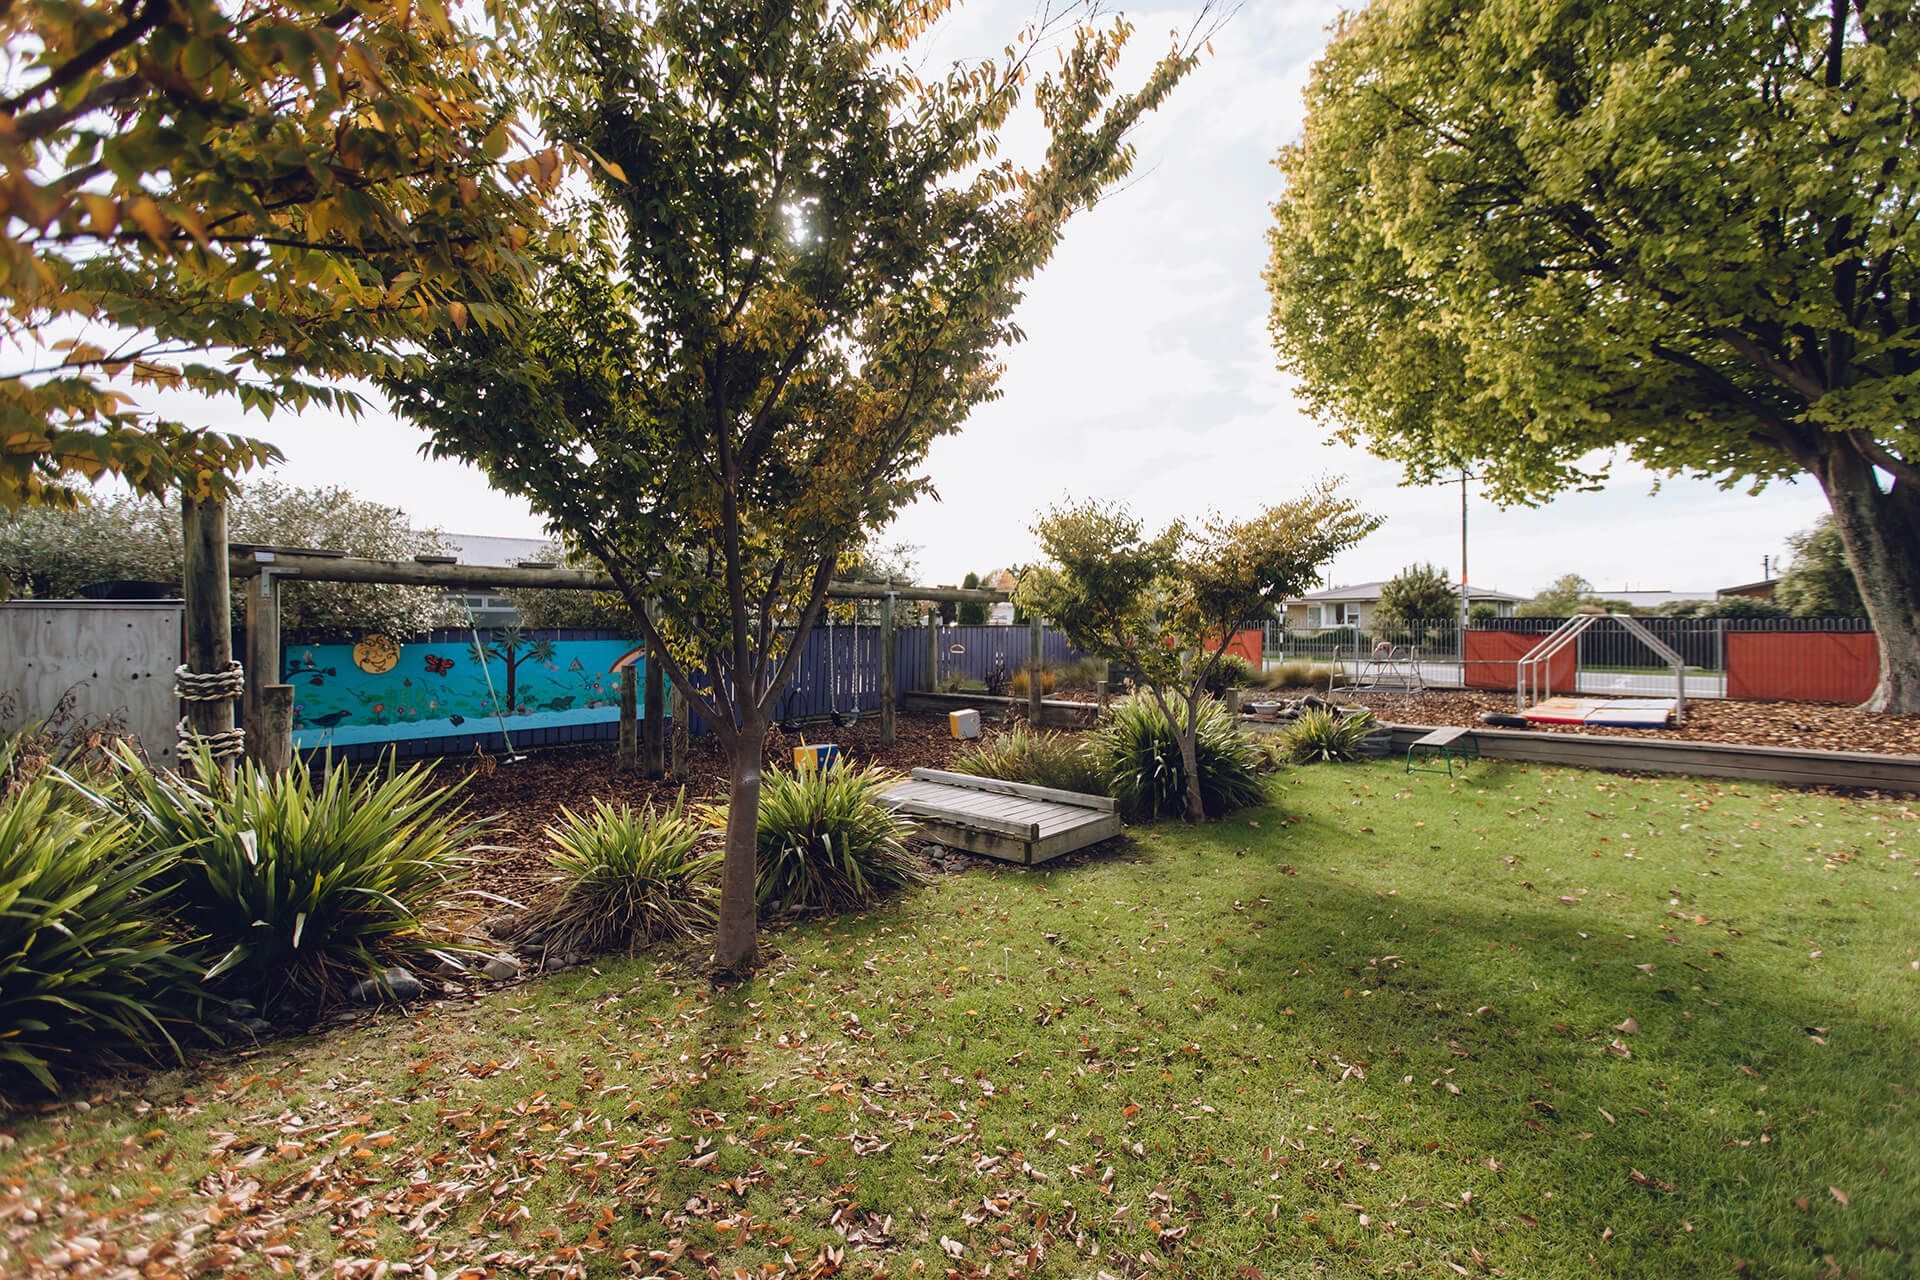 Seymour Kindergarten in Marlborough, New Zealand